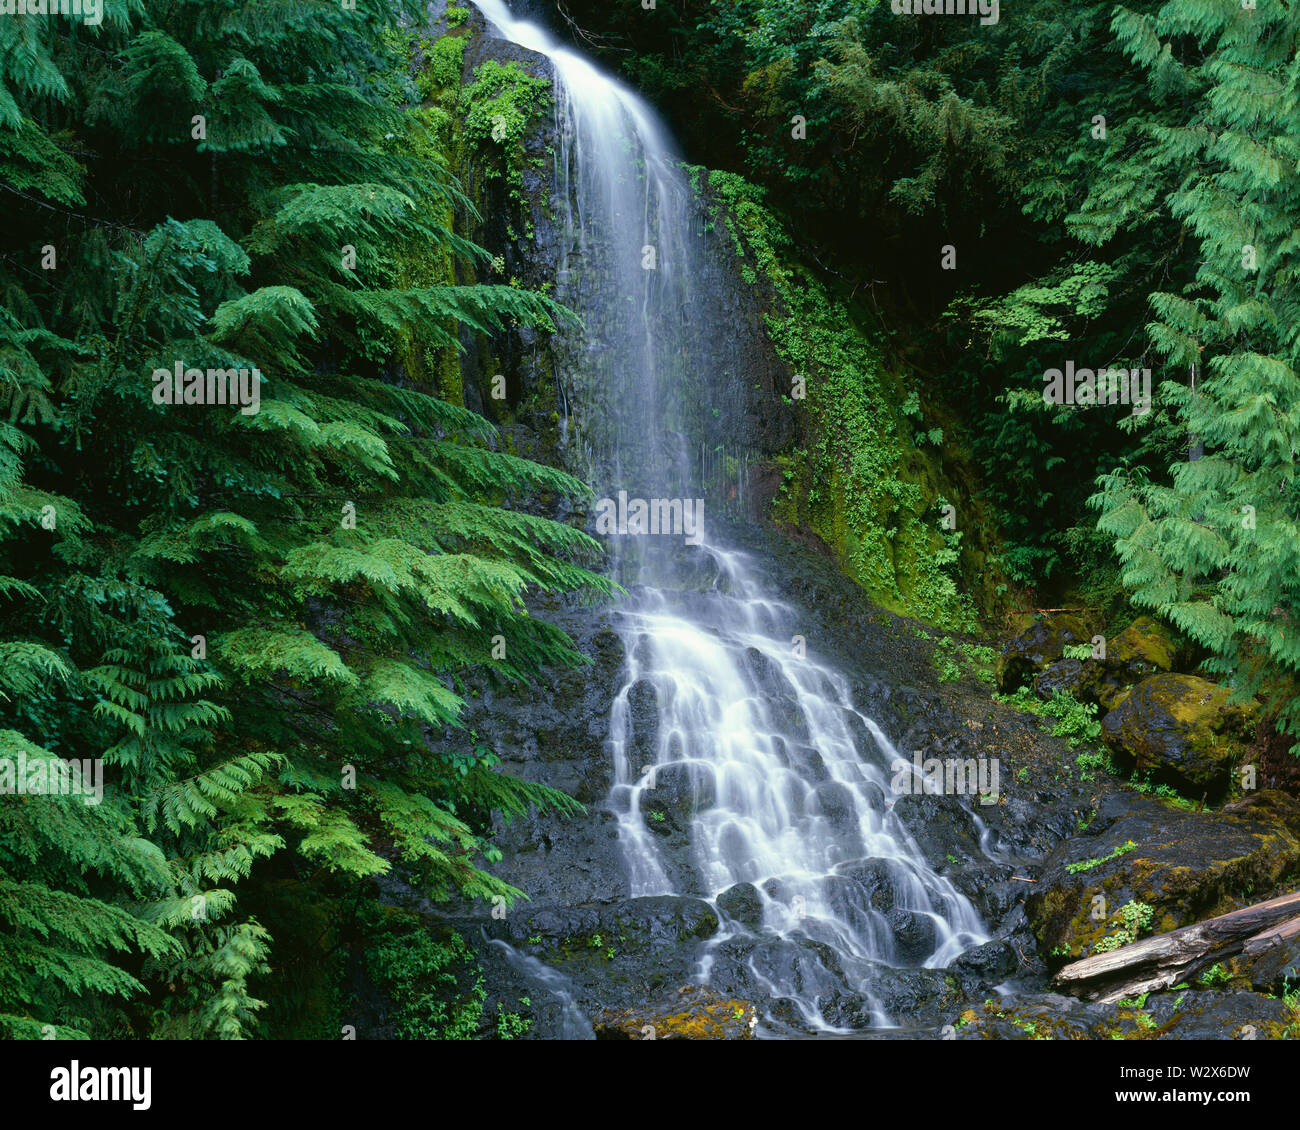 USA, Washington, Mt. Rainier National Park, Fall Creek Falls is surrounded by western hemlock and western red cedar. Stock Photo